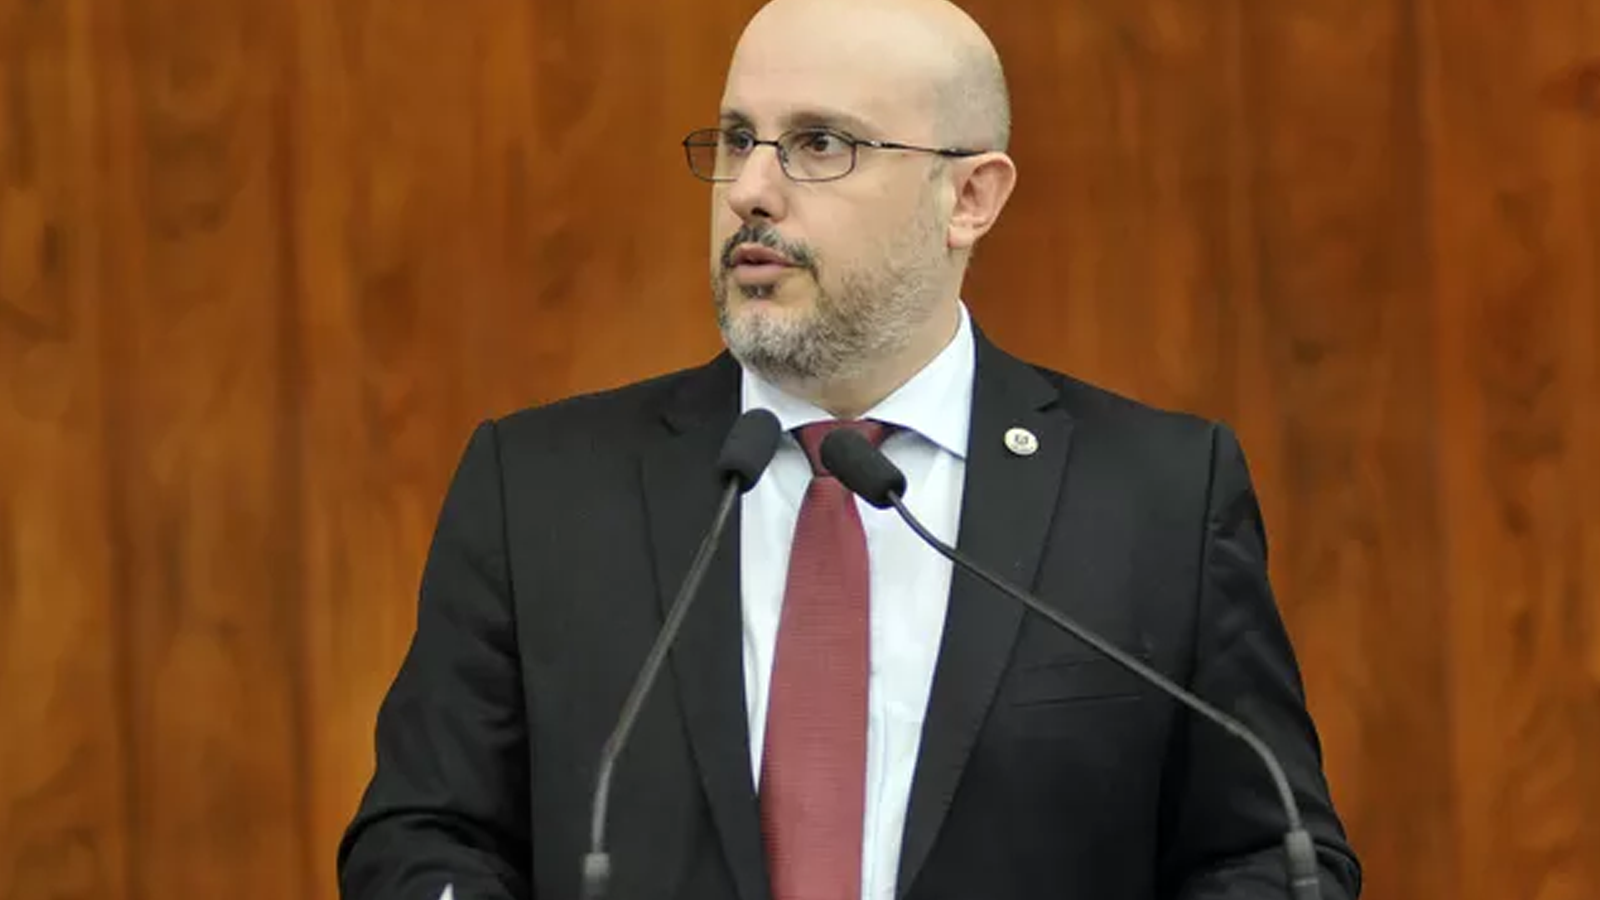 Rodrigo Lorenzoni avalia a primeira semana no retorno à Assembleia Legislativa